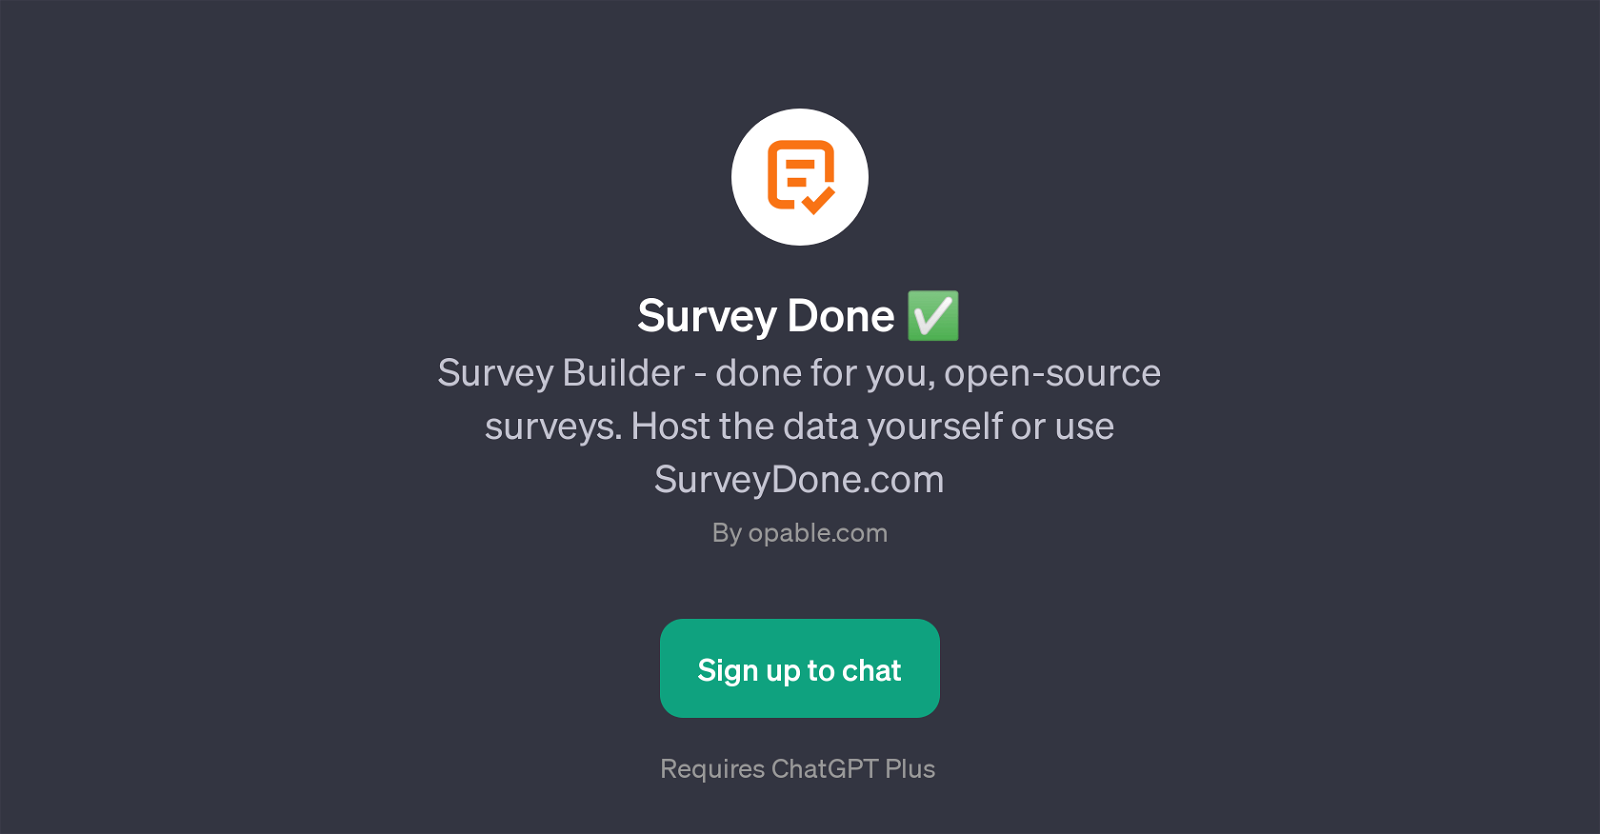 Survey Done website